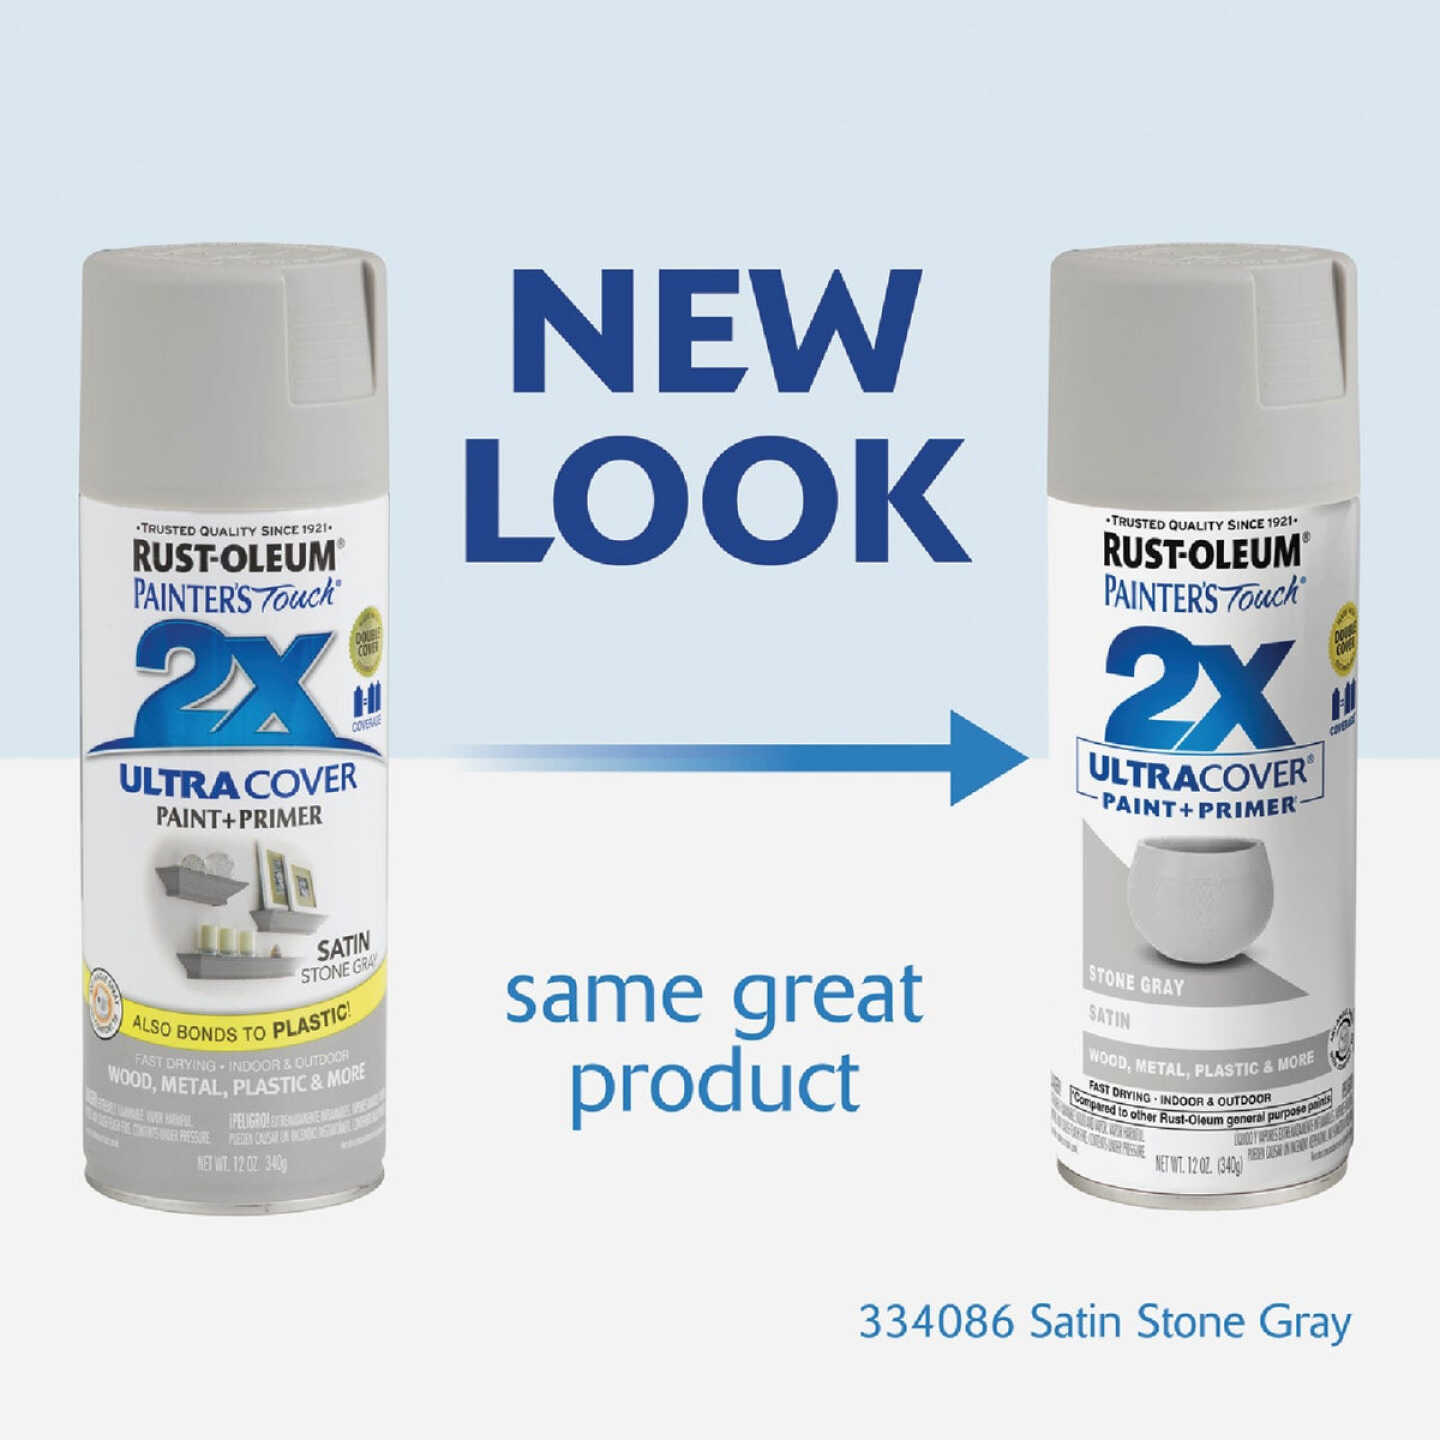 Rust-Oleum 2-in-1 Automotive Primer Spray Paint Flat Gray 12 oz